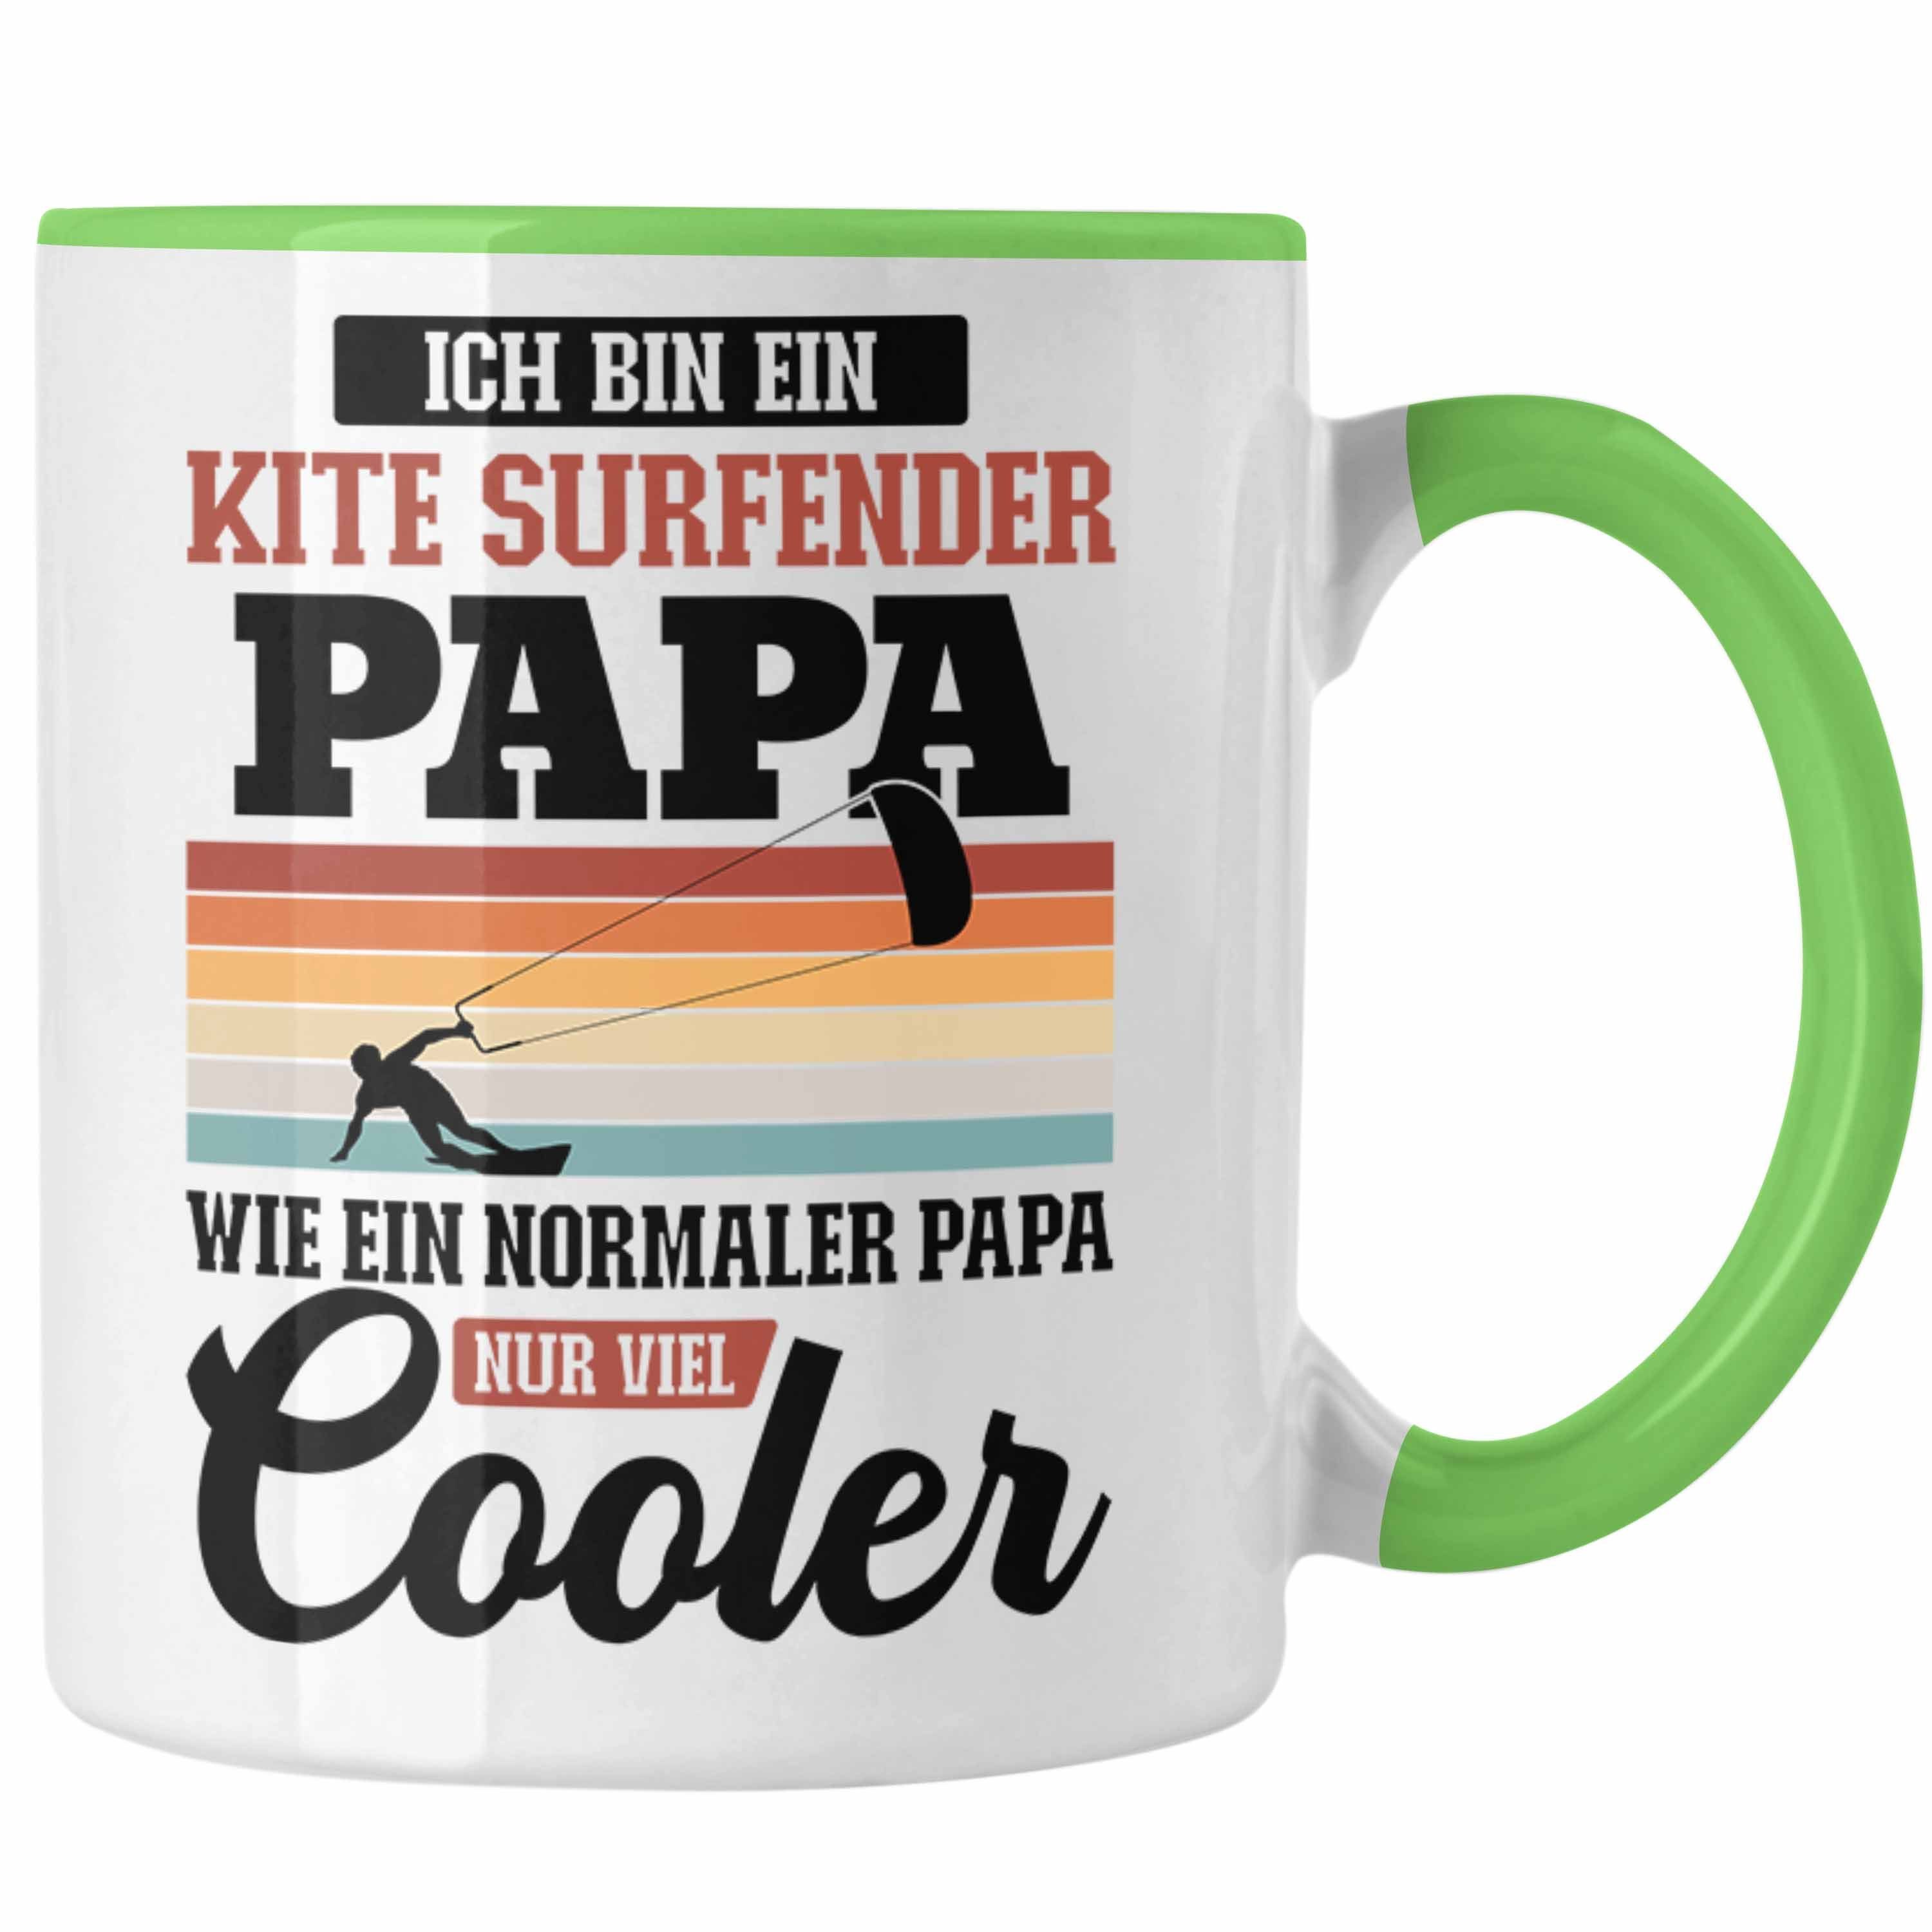 Trendation Tasse Trendation - Kitesurf Papa Kitesurfen Geschenk Tasse Vater Kite Surfender Papa Kitesurfing Grün